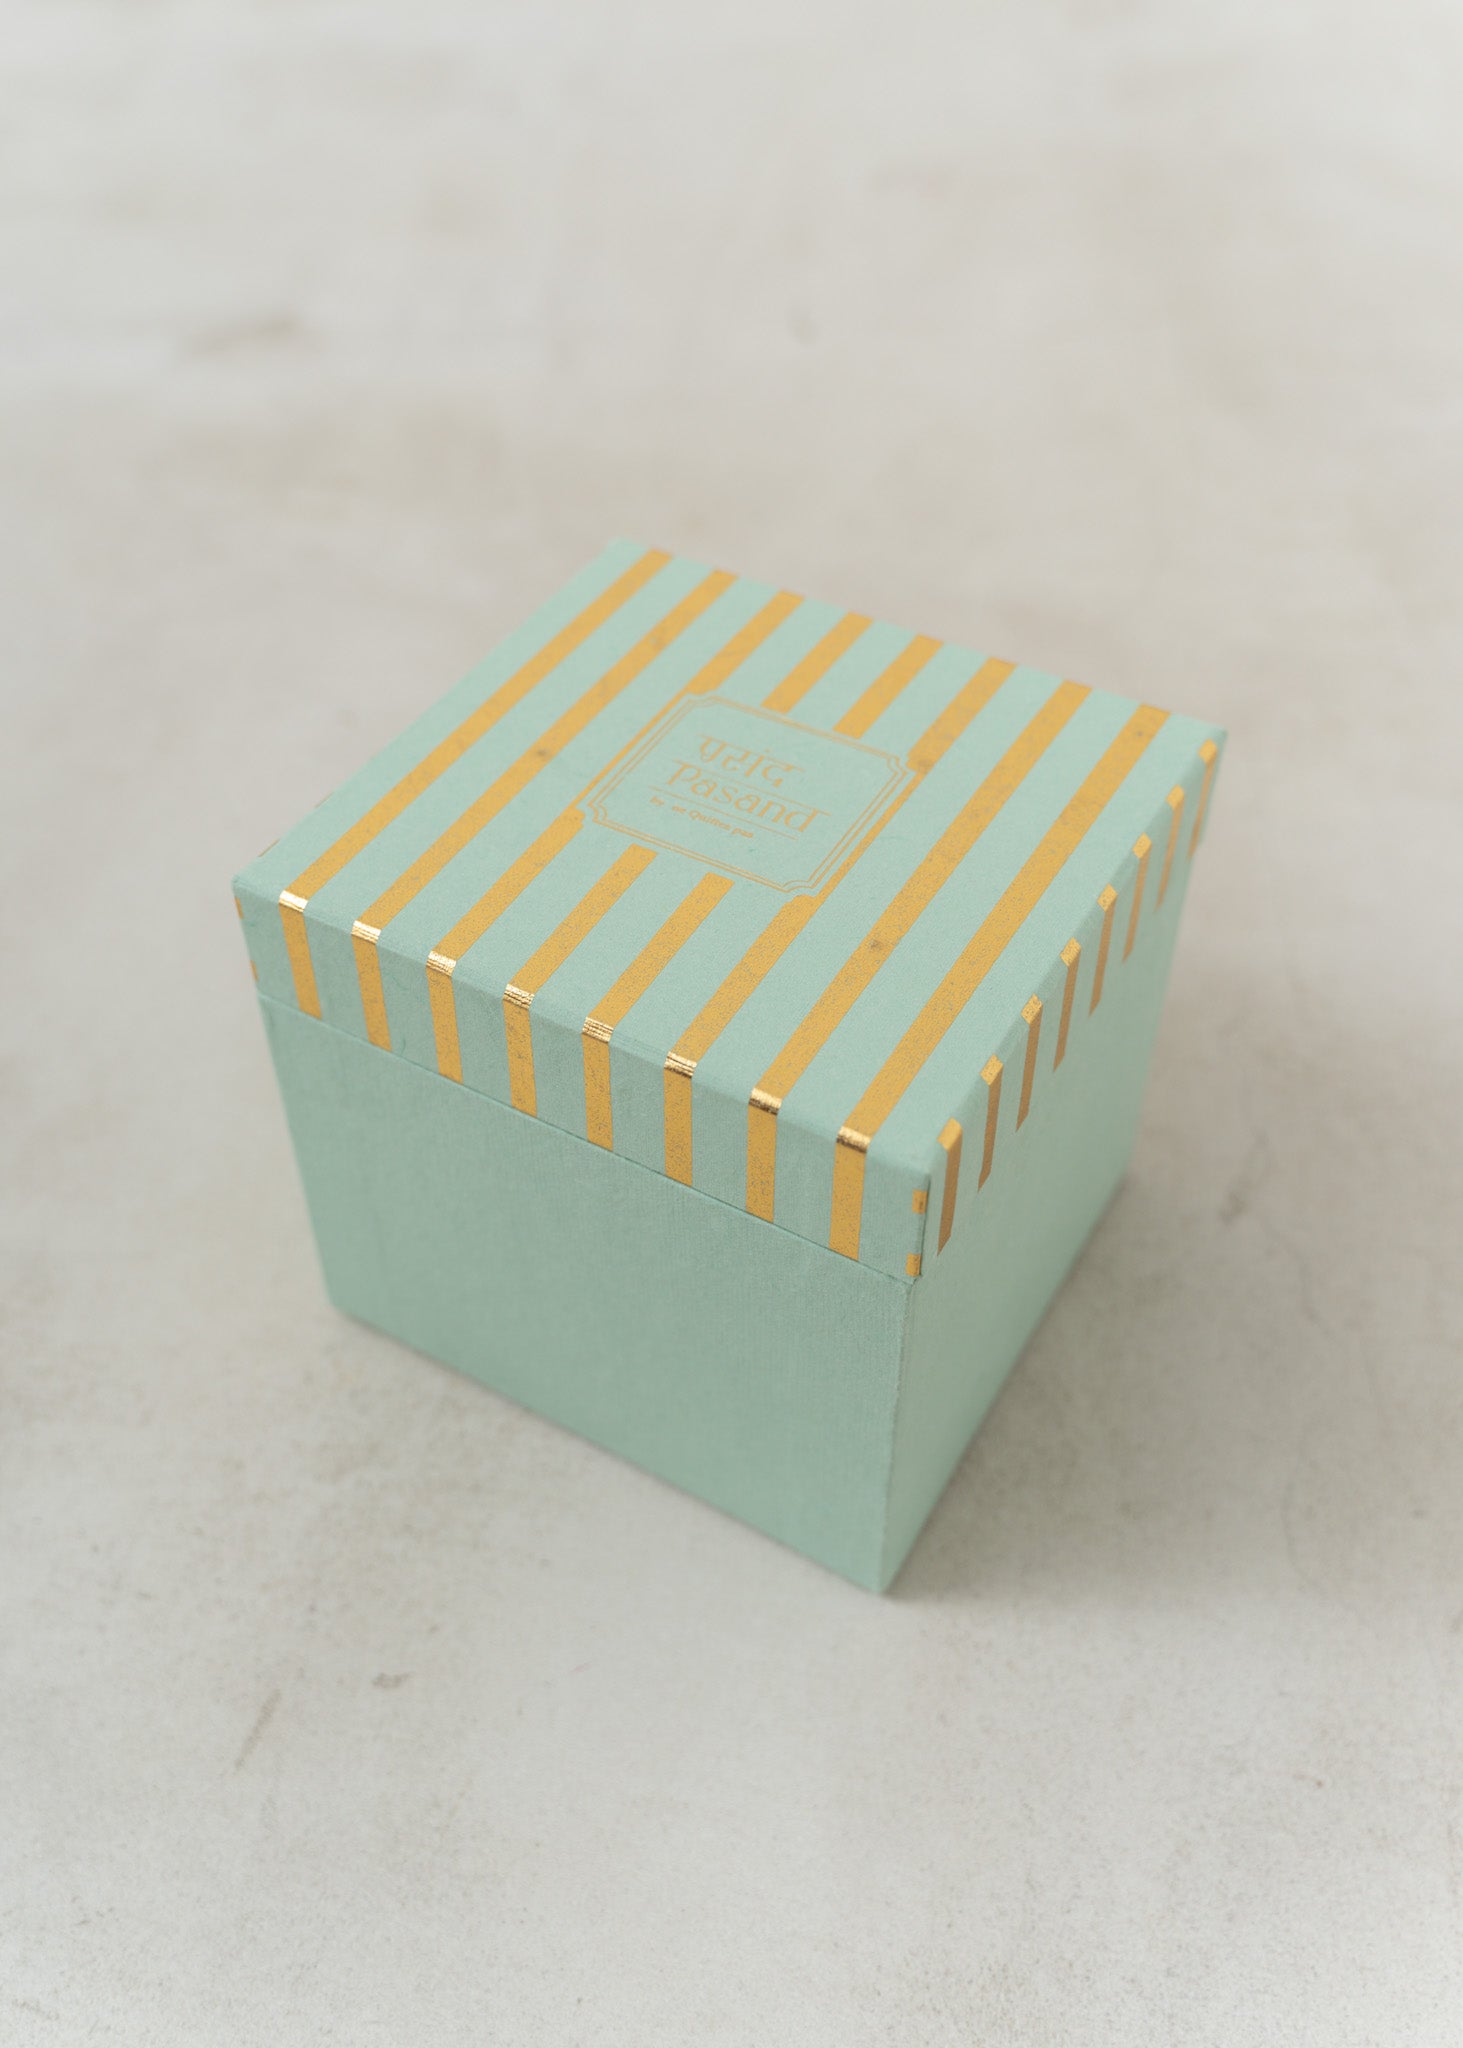 Pasand Original Paper Gift Box Small | Pasand by ne Quittez pas 